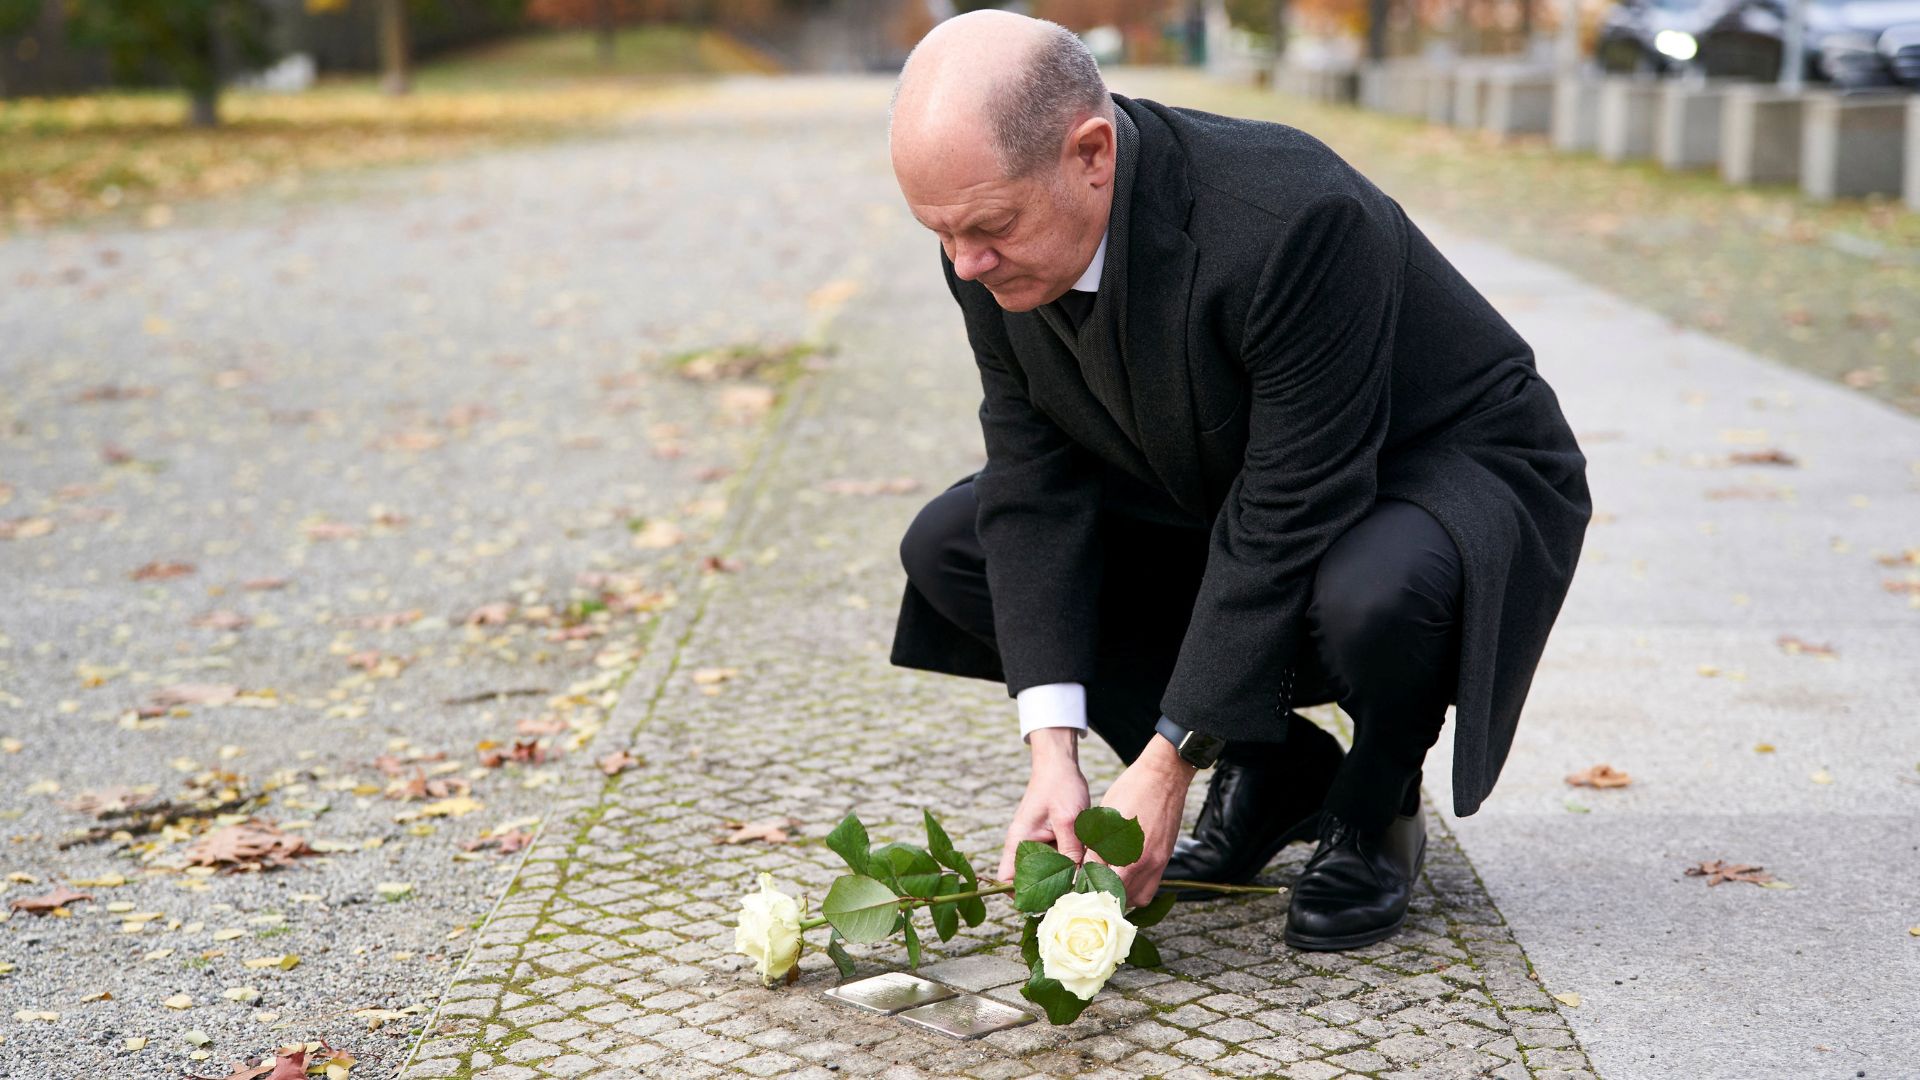 Scholz cleans Stumbling Stones (Stolpersteine) to commemorate Holocaust victims Hans Goslar und Ruth Judith Goslar near the chancellery in Berlin. /Henning Schacht/Bundesregierung/Handout via Reuters